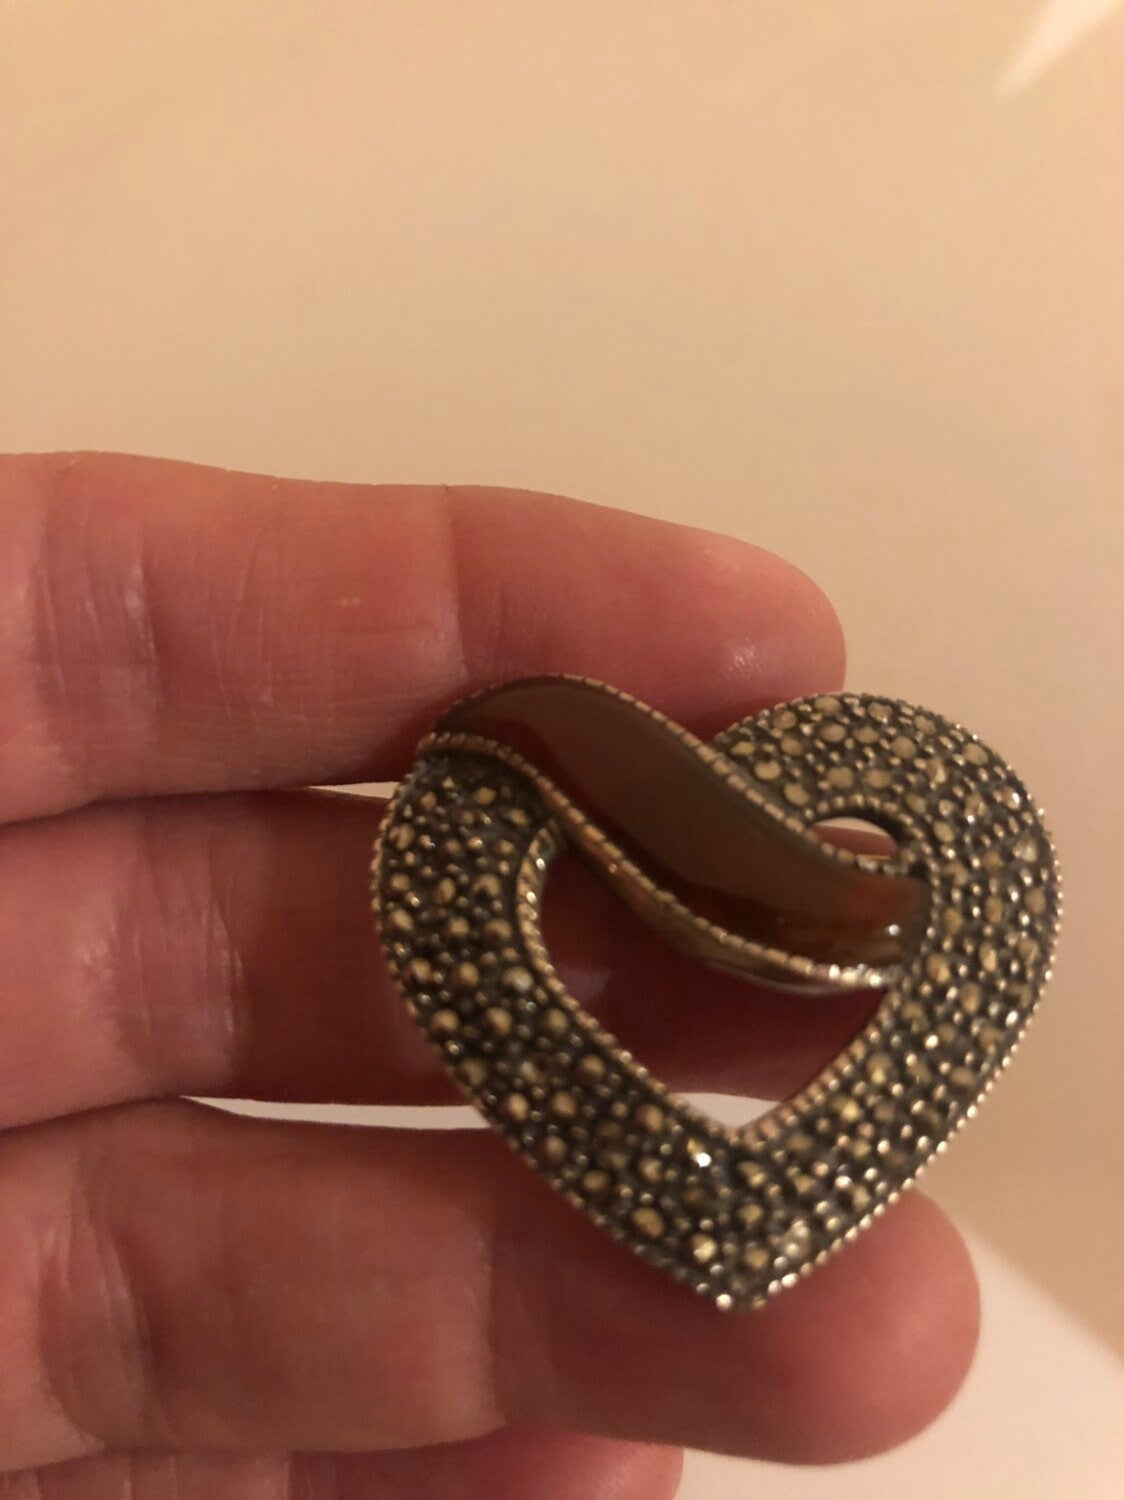 Vintage Handmade Genuine Marcasite 925 Sterling Silver valentine Heart Brooch